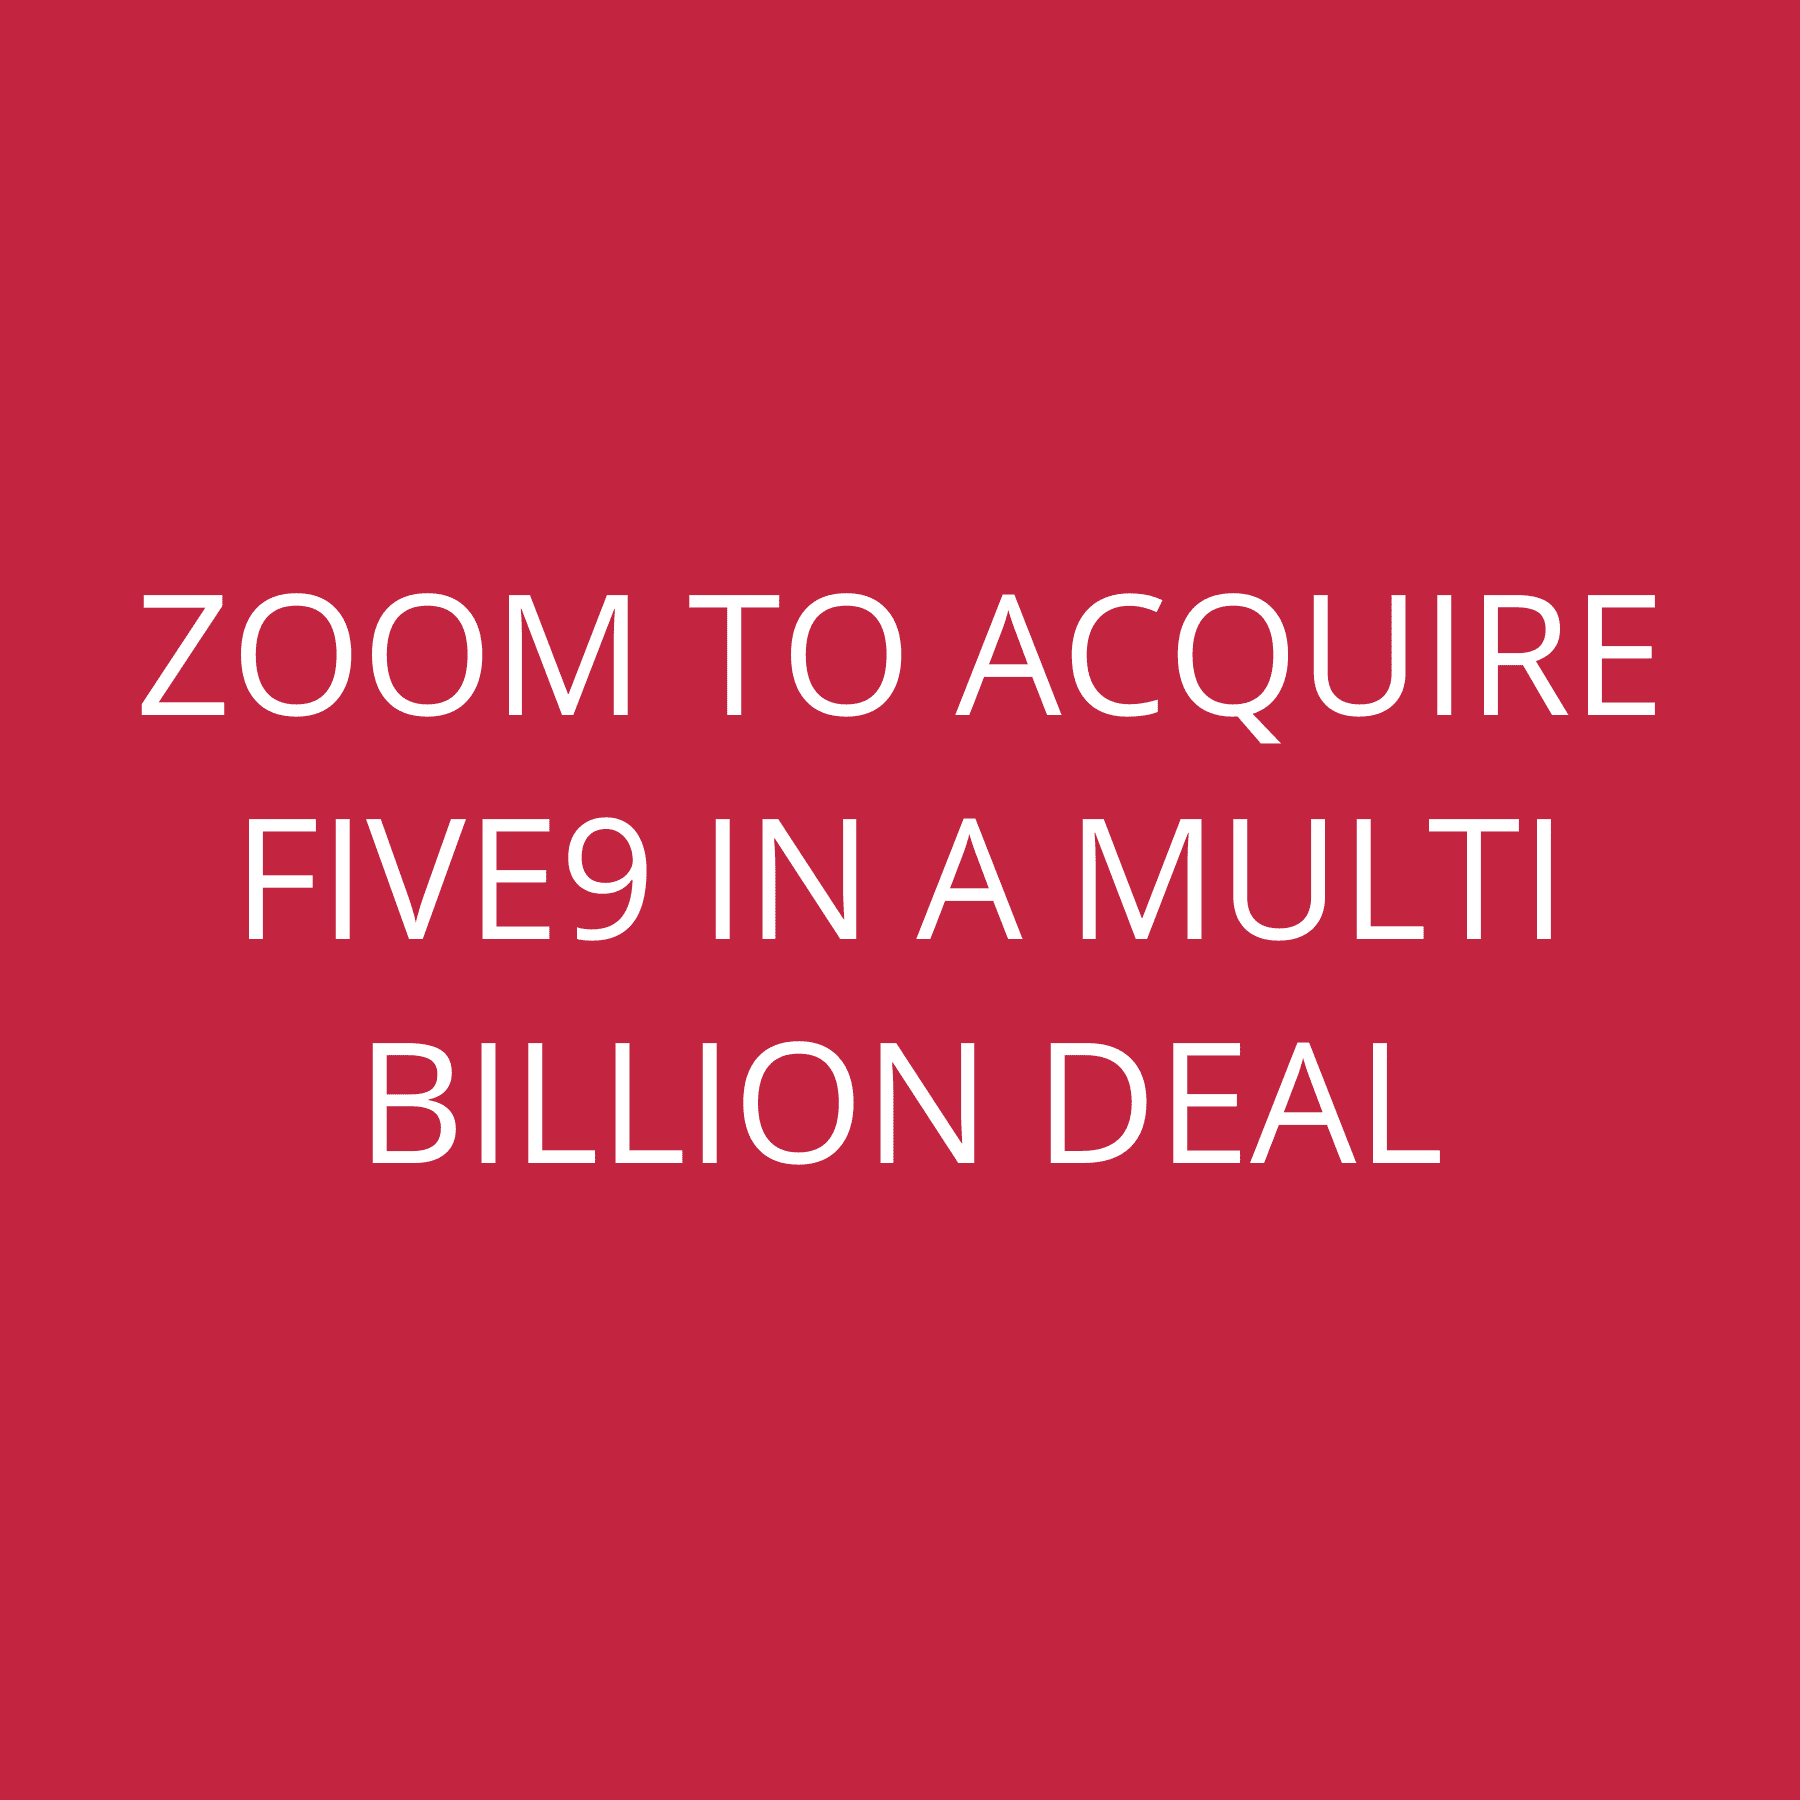 Zoom to acquire Five9 in a multi billion deal